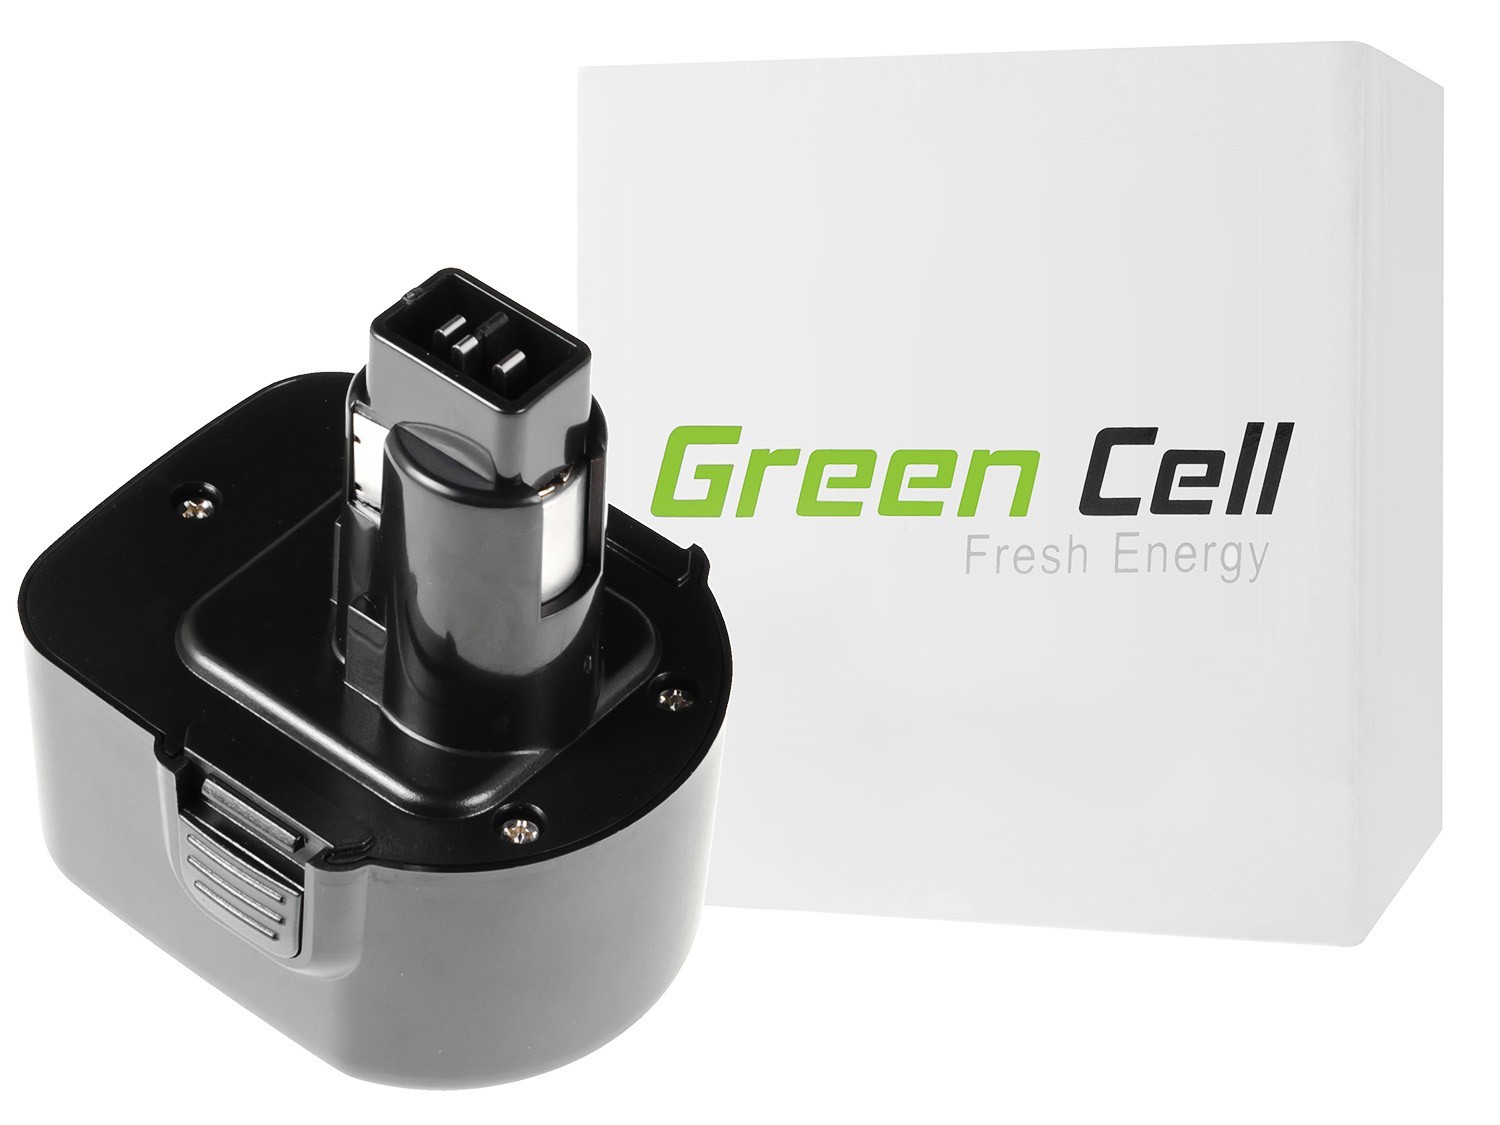 Green Cell Power Tool Battery for DeWalt DE9037 DE9071 DE9074 12V 2Ah